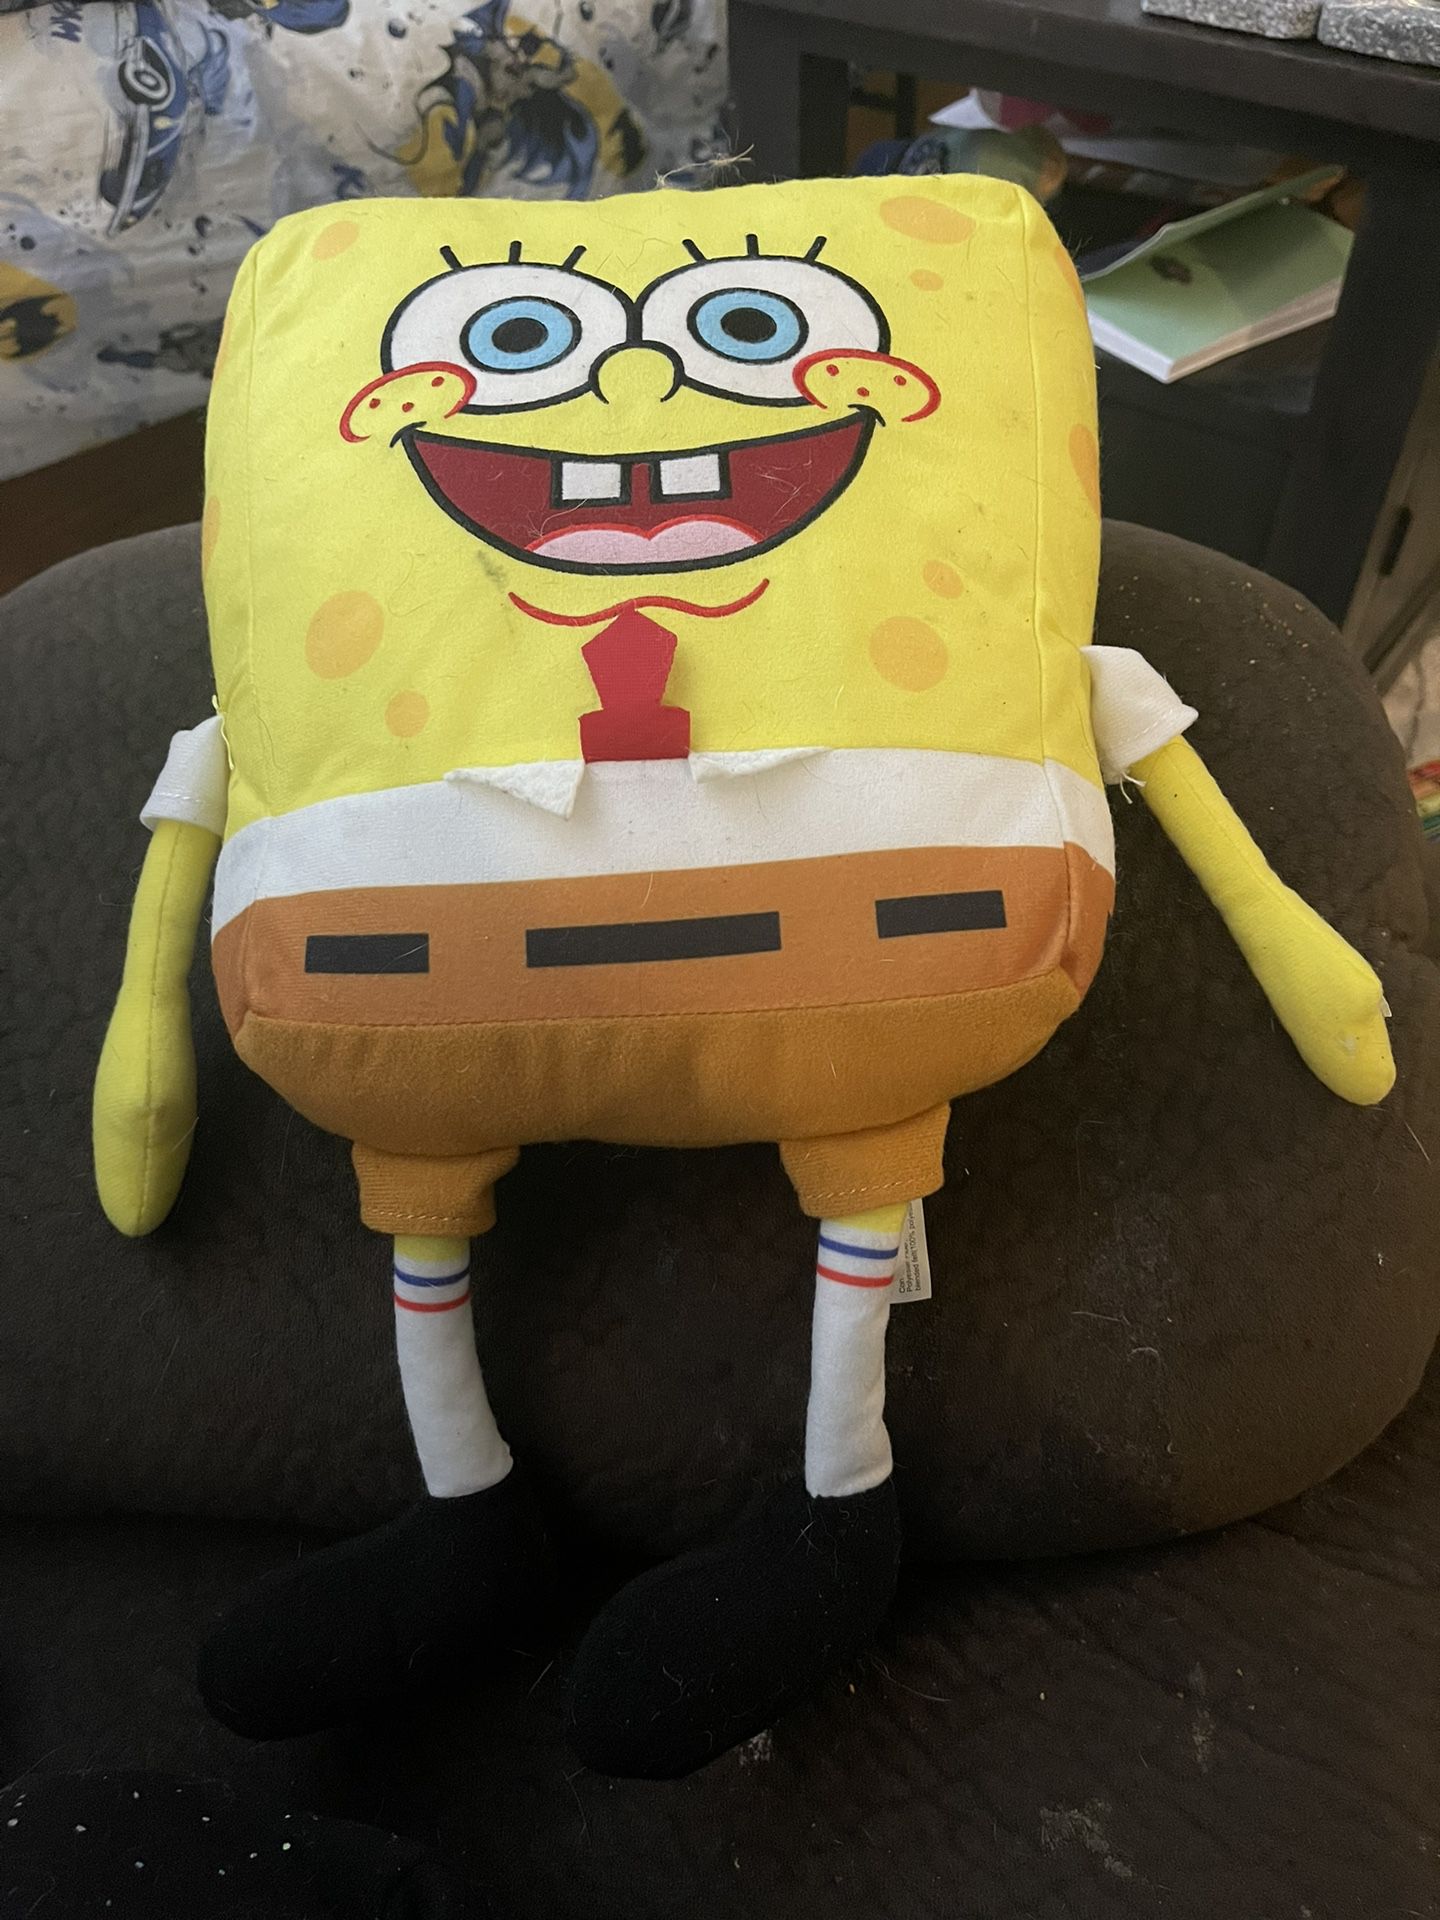 SpongeBob Plush Toy 